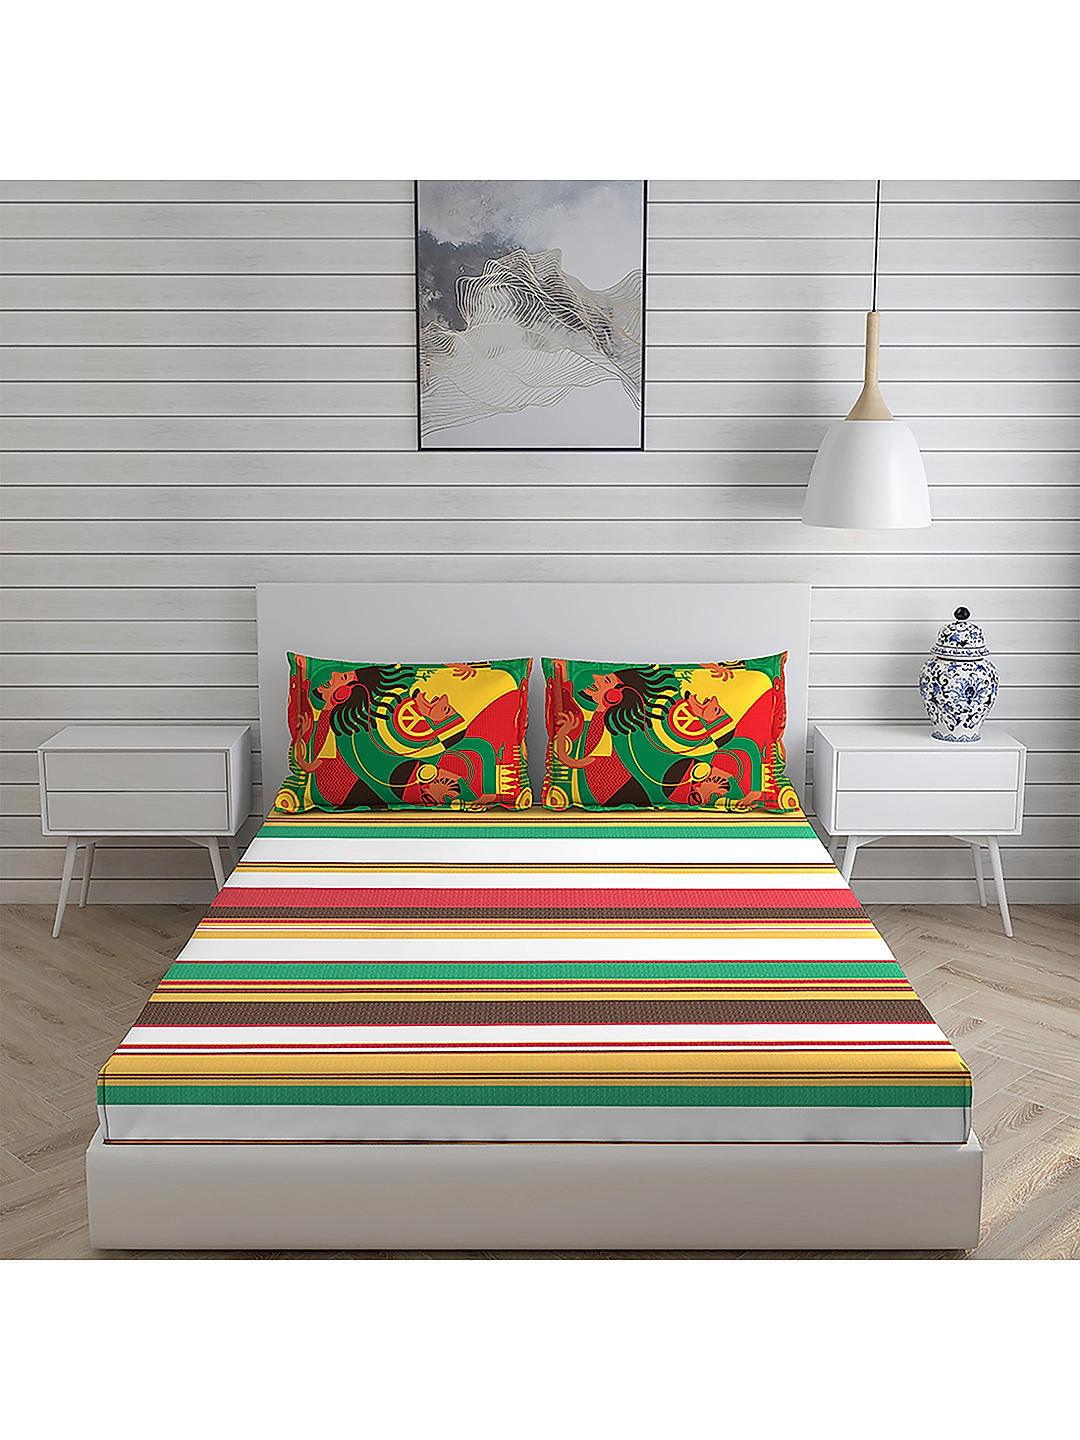 Rasta Rhyms 100% cotton Fine Multi Colored Stripes Print King Bed Sheet Set